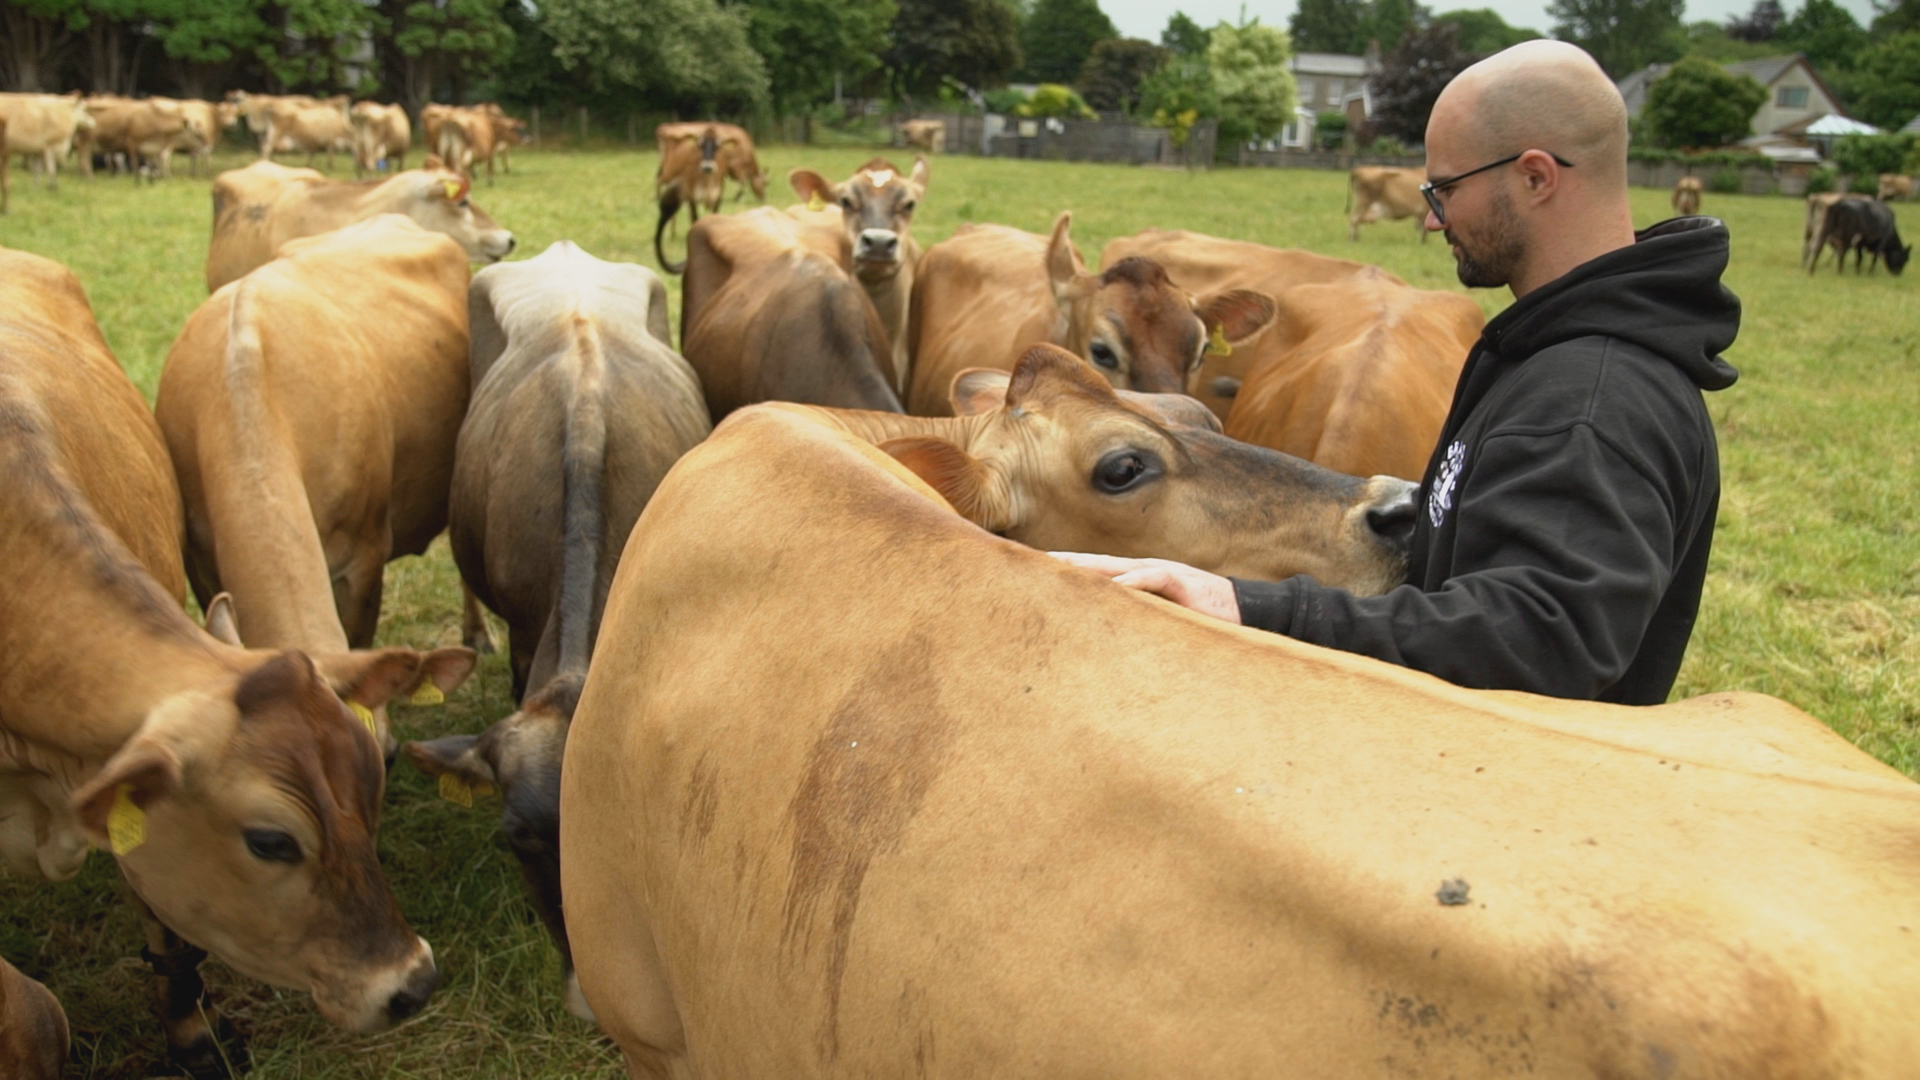 Ed Towers, a dairy farmer at Brades Farm in Lancashire